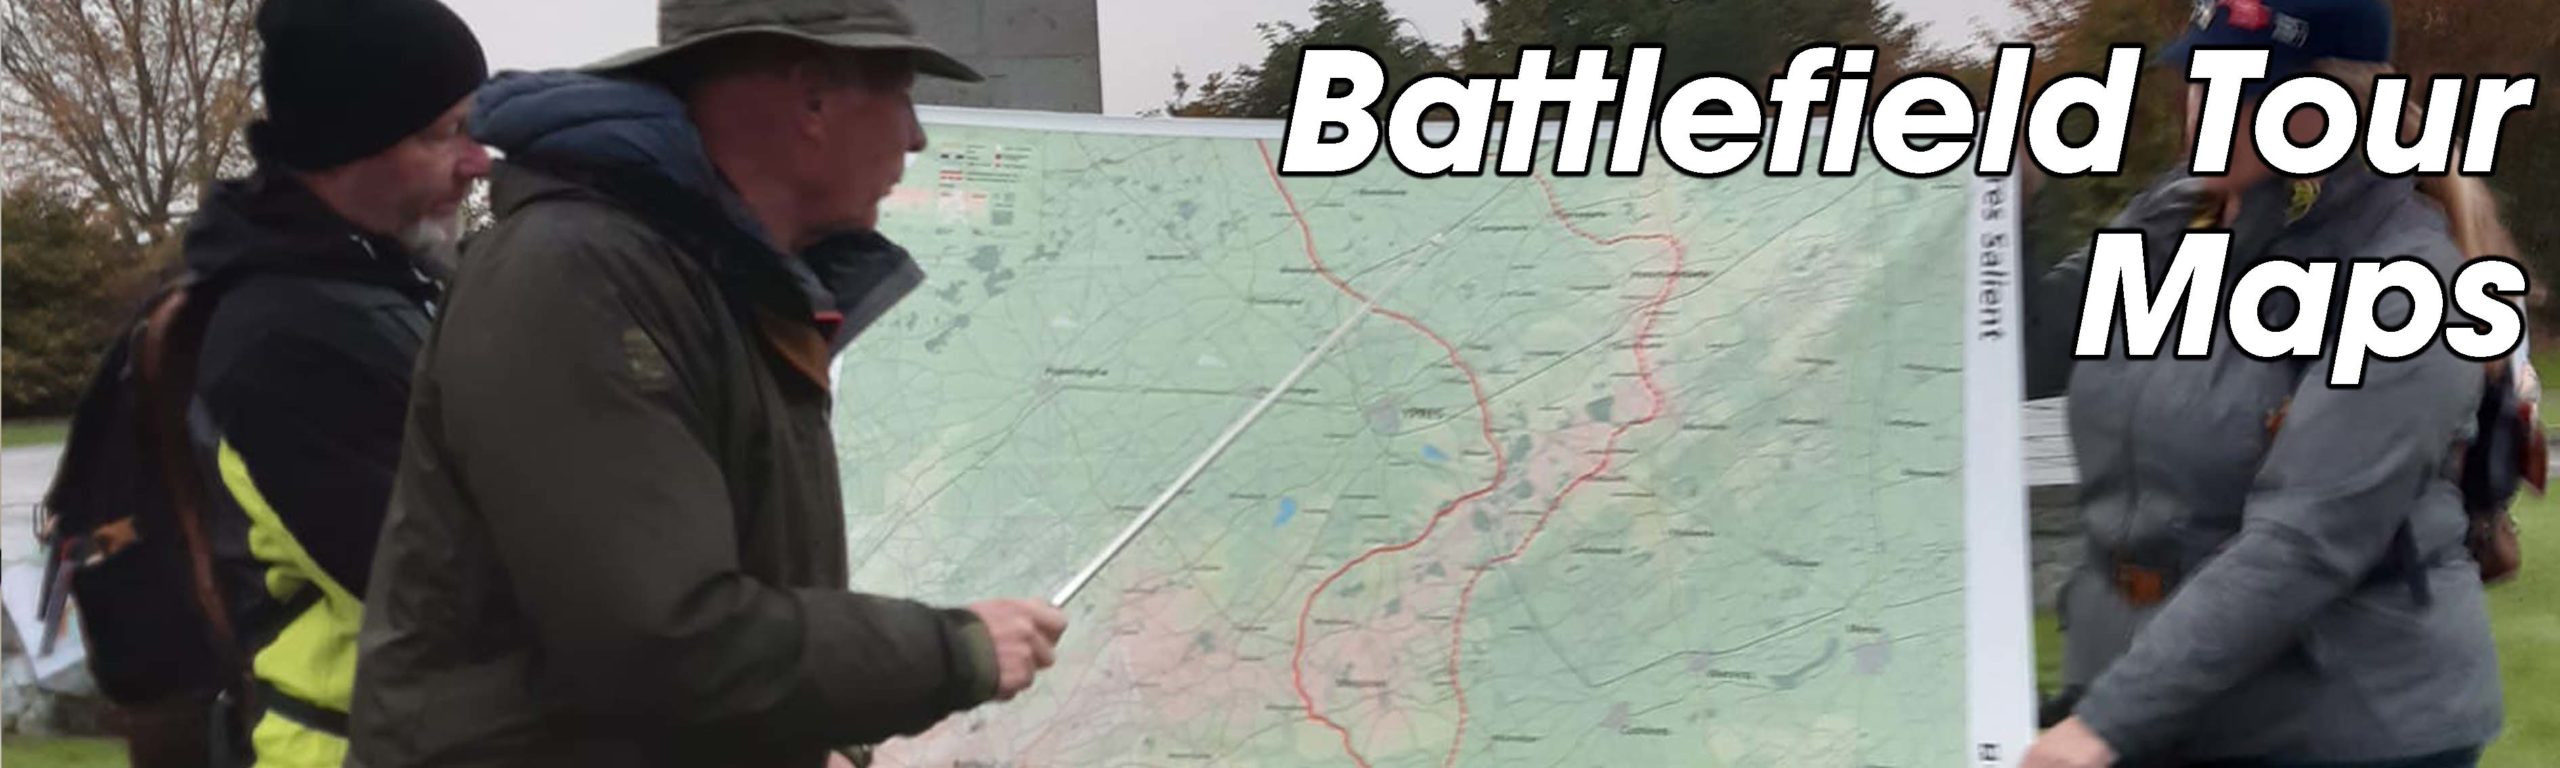 battlefield tour guide training